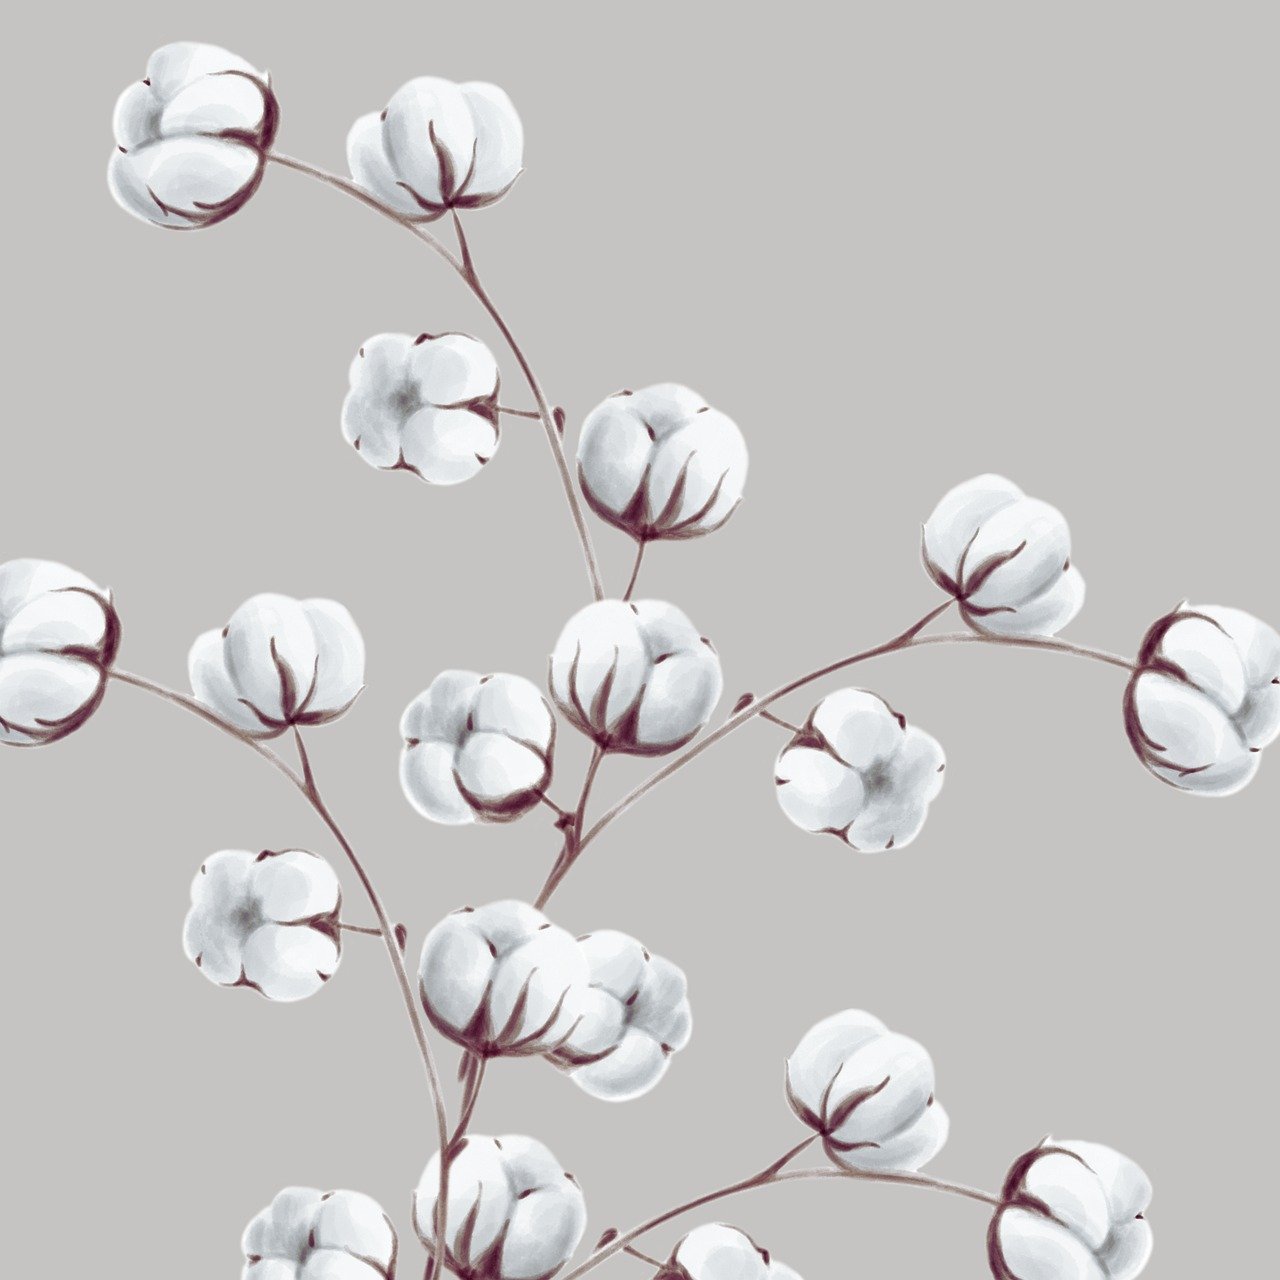 A-drawn-cotton-flower-branch